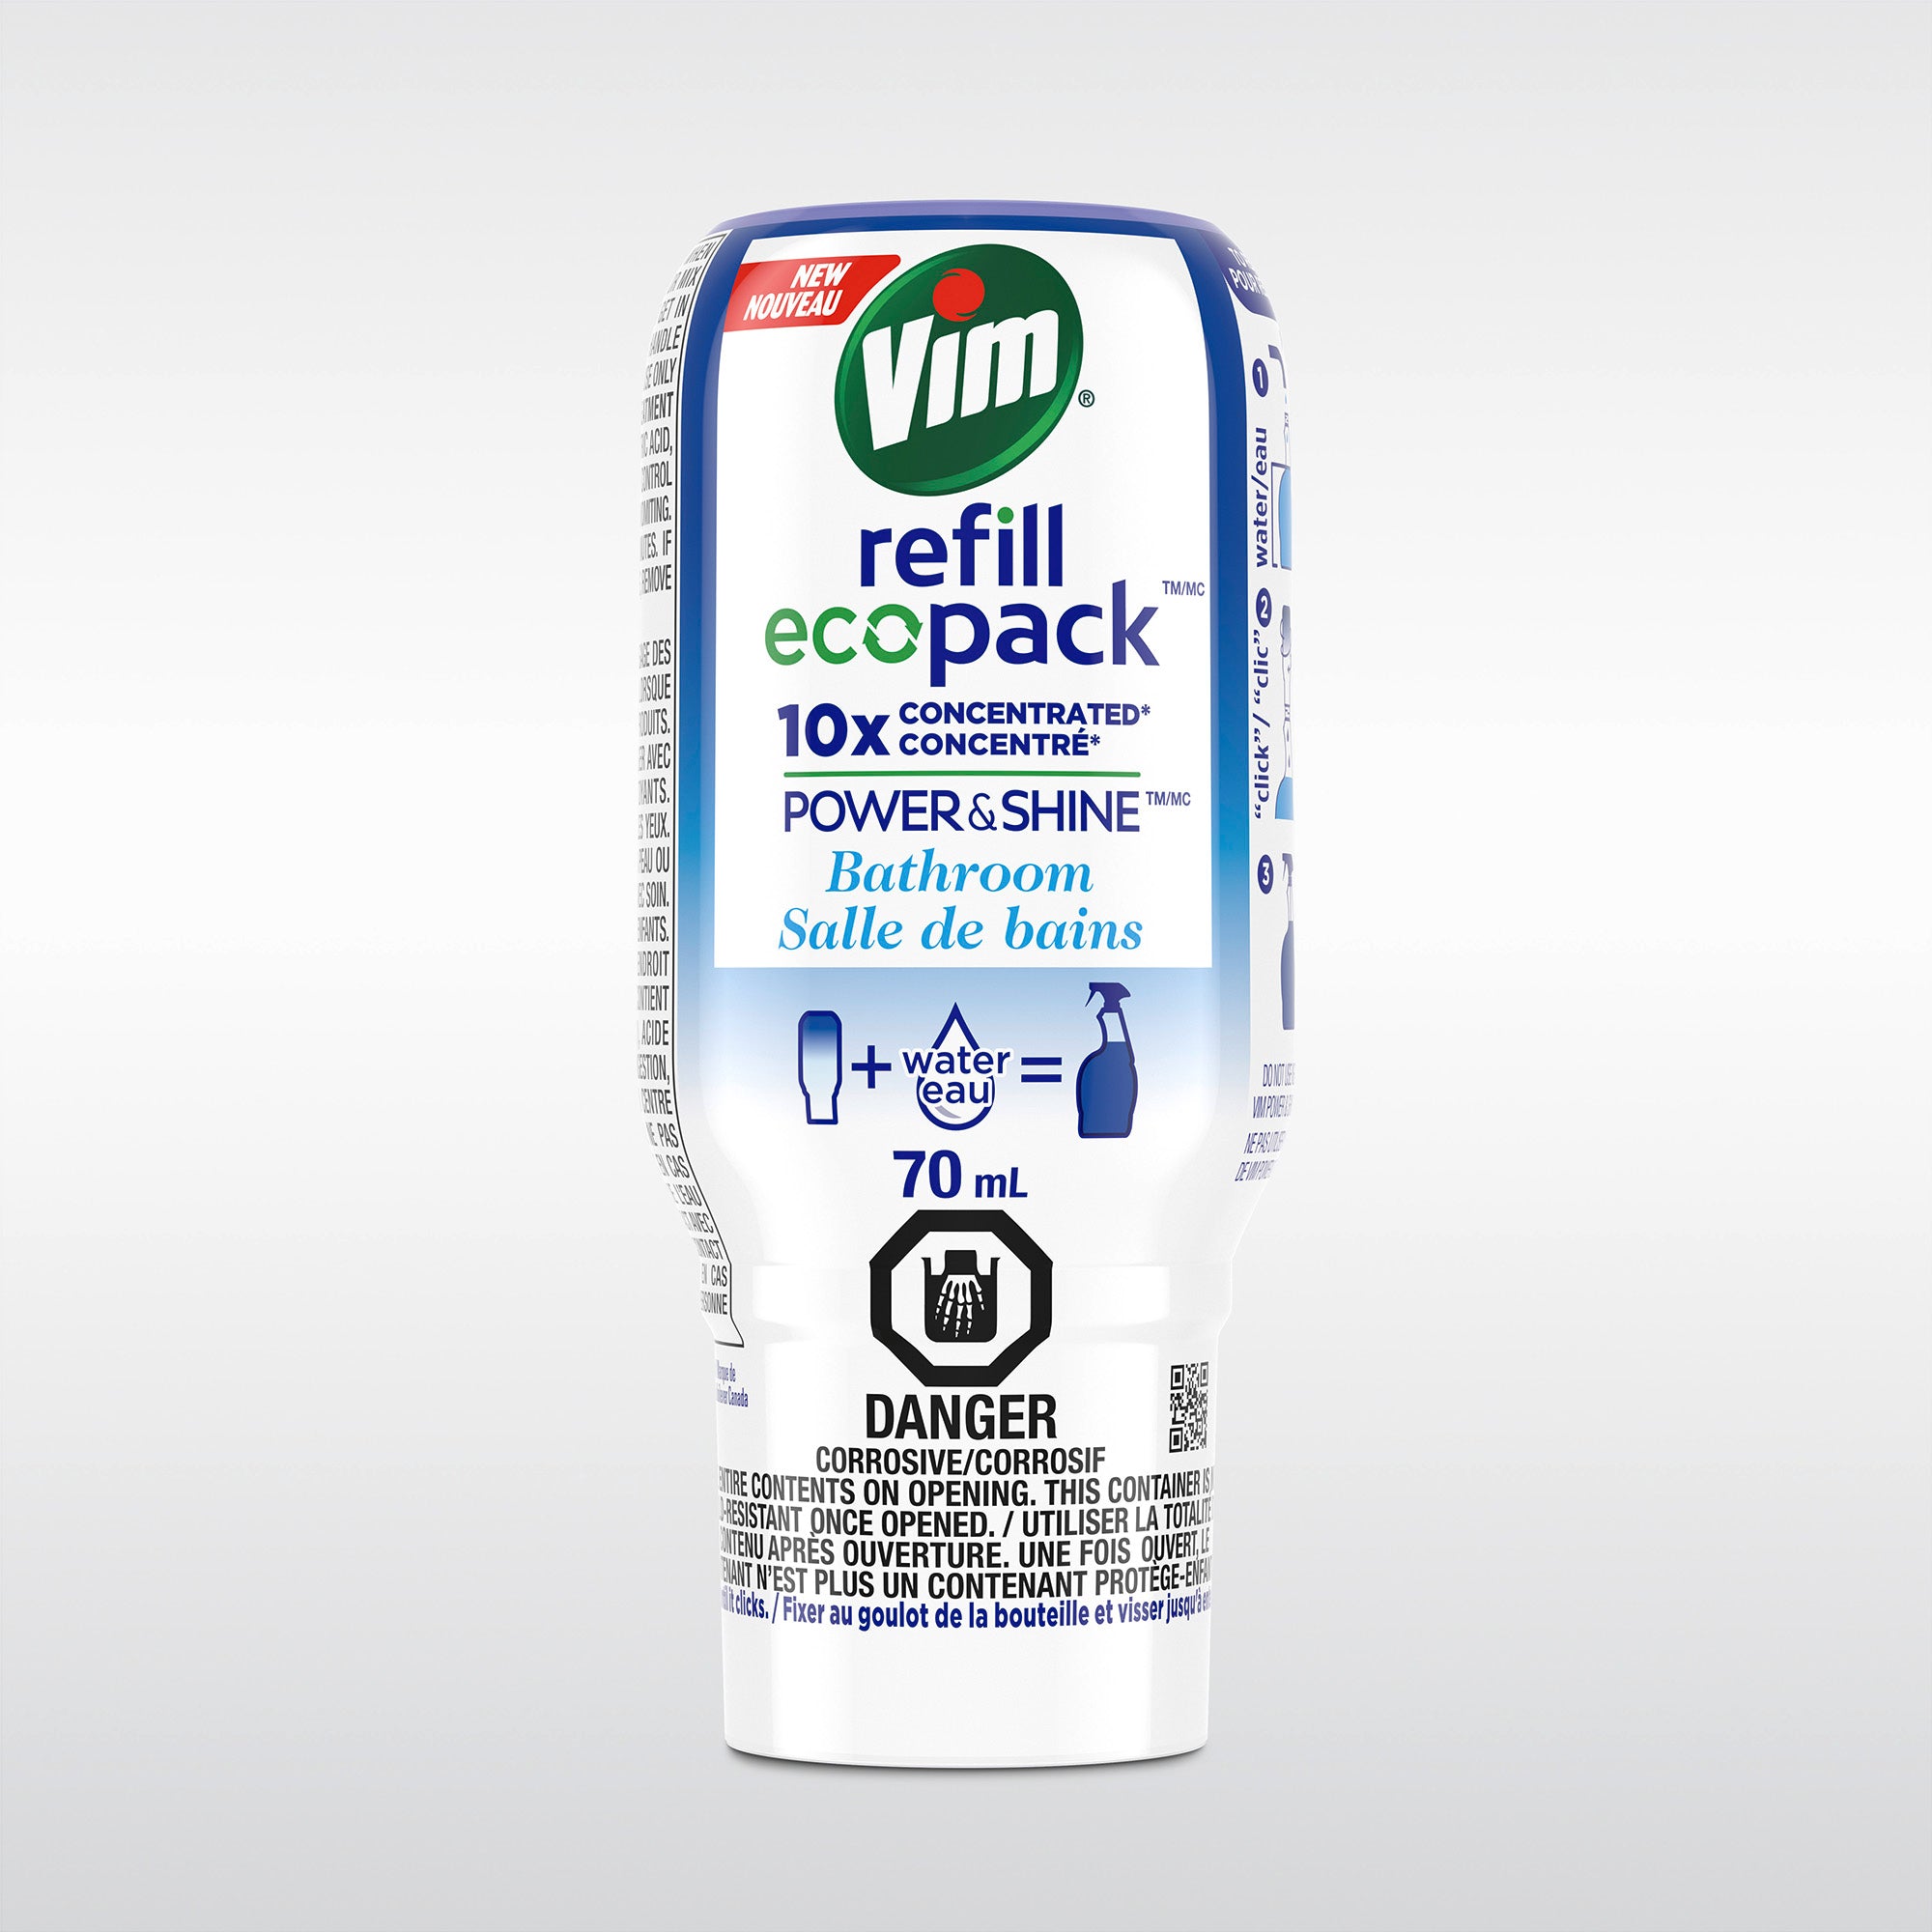 Vim Power & Shine Bathroom Refill Ecopack 70ml